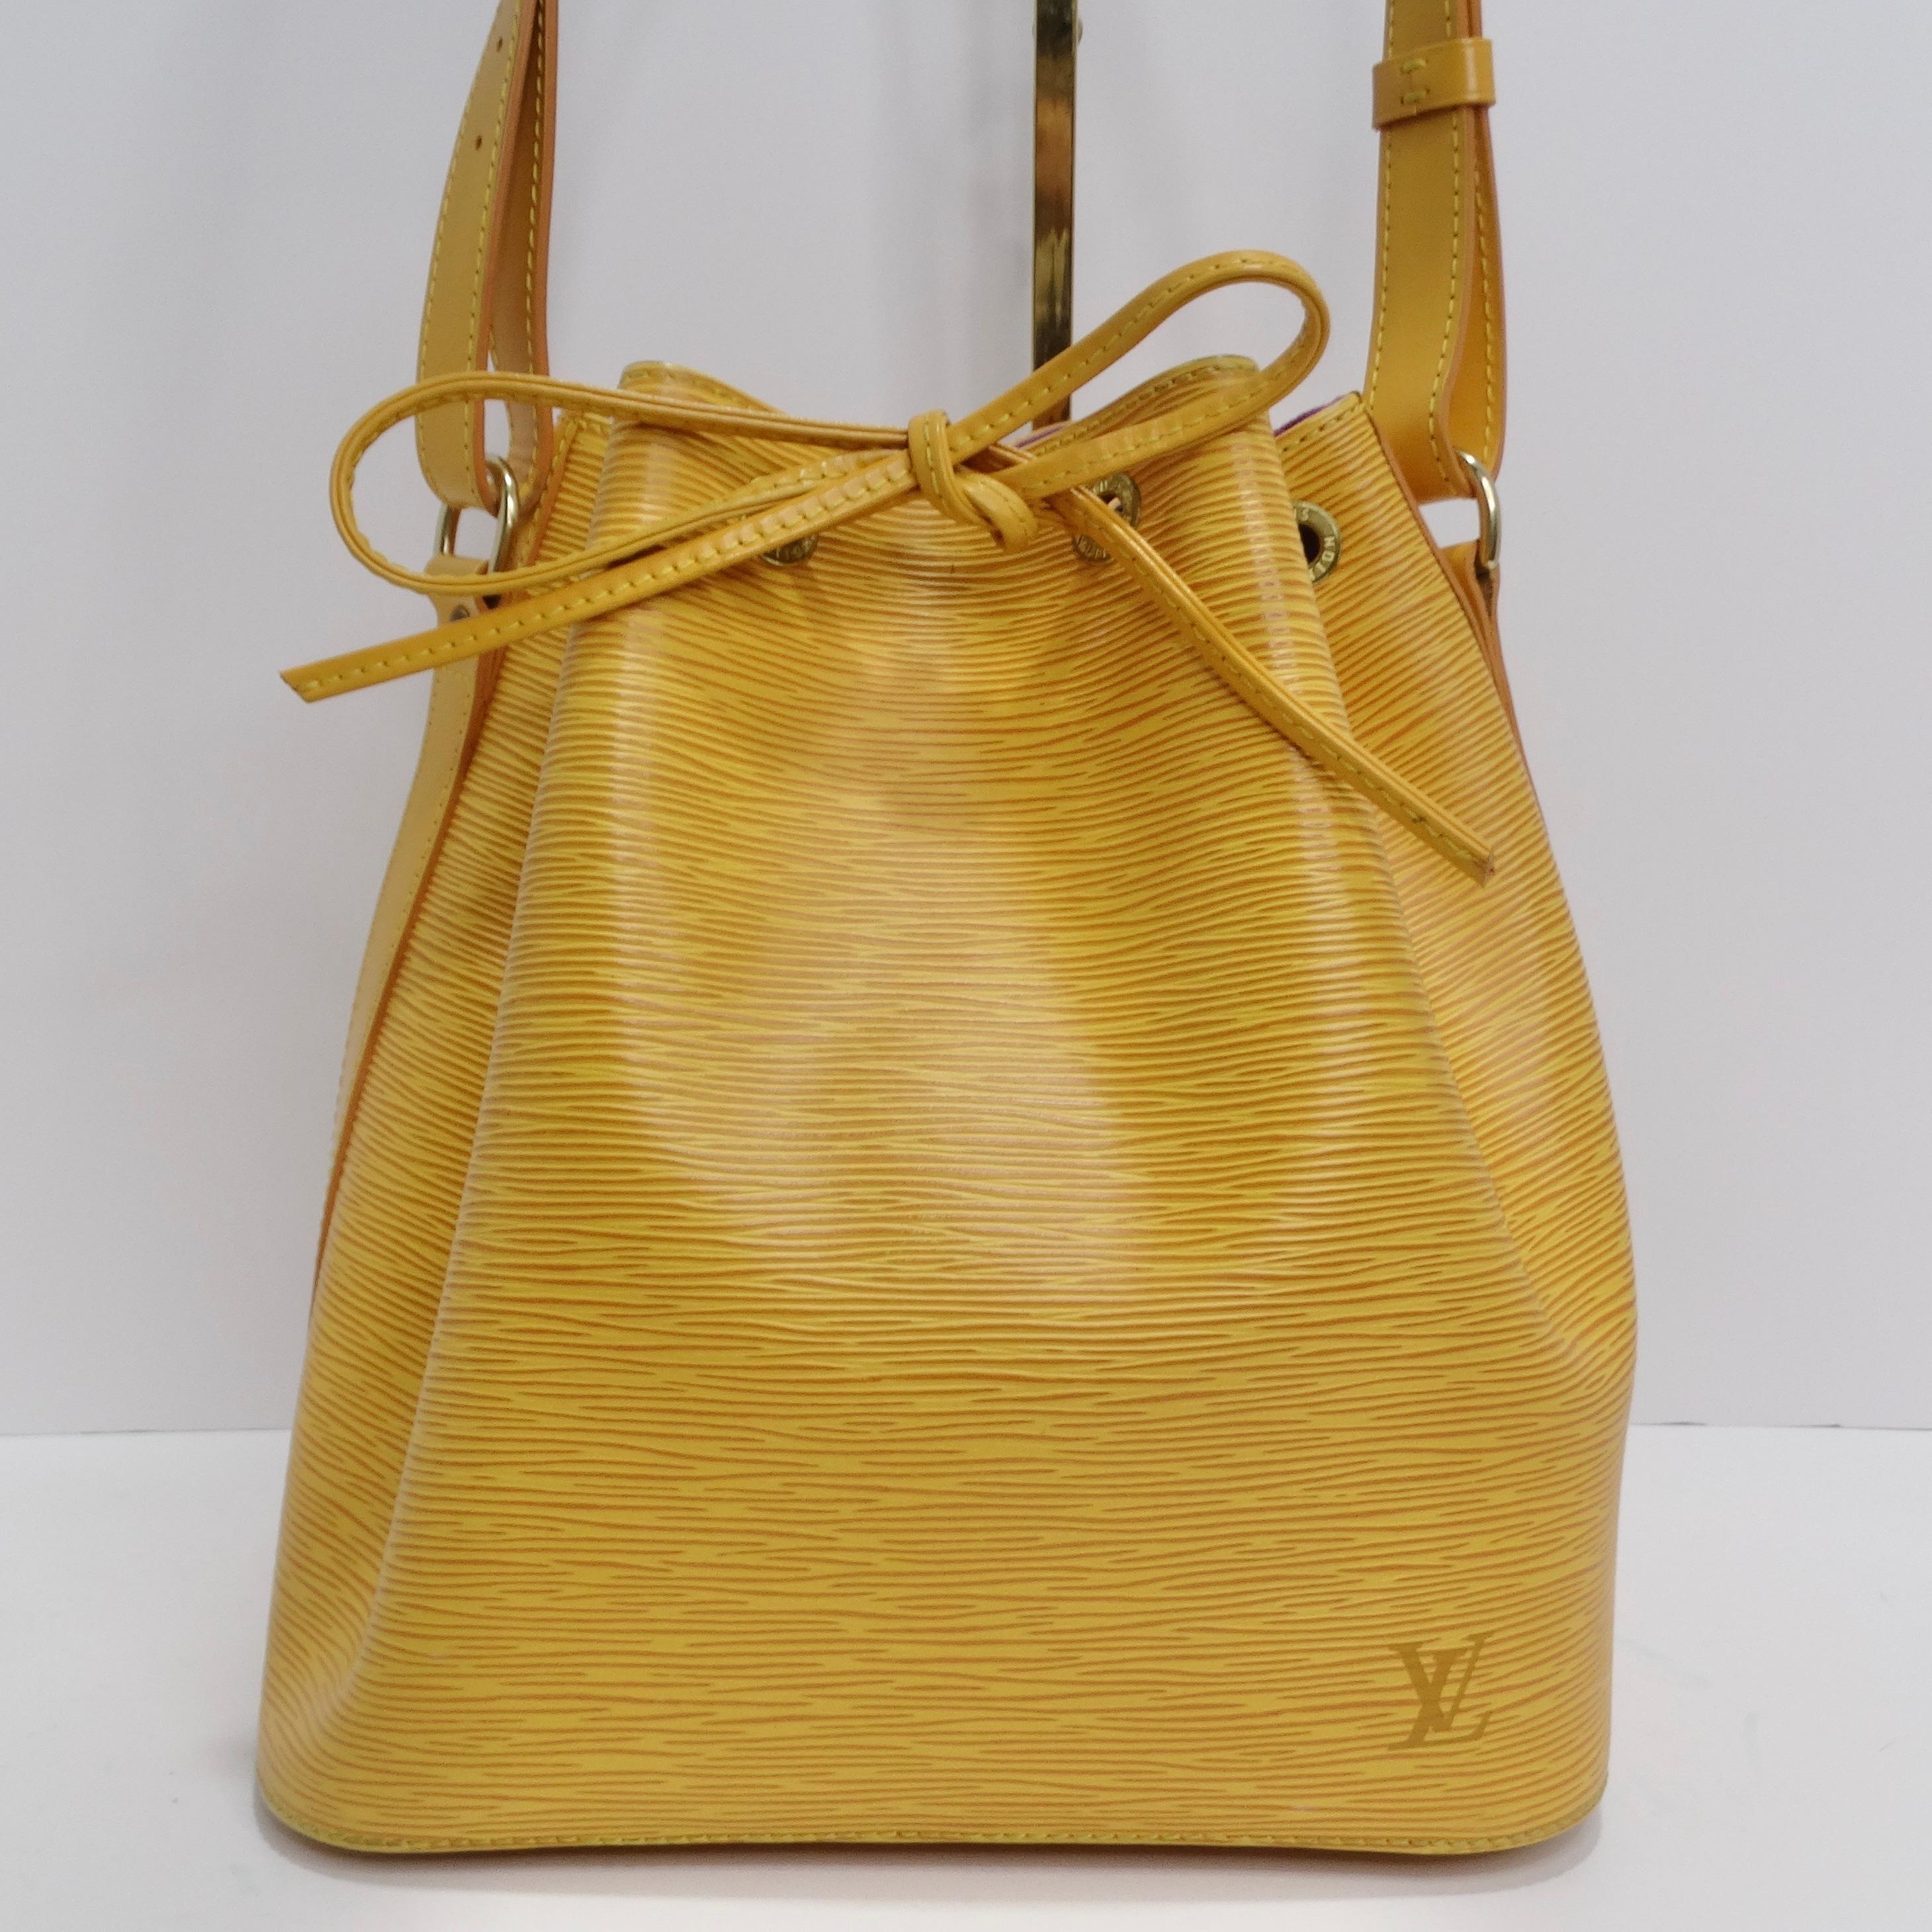 Louis Vuitton Epi Petite Noe Shoulder Bag In Good Condition For Sale In Scottsdale, AZ